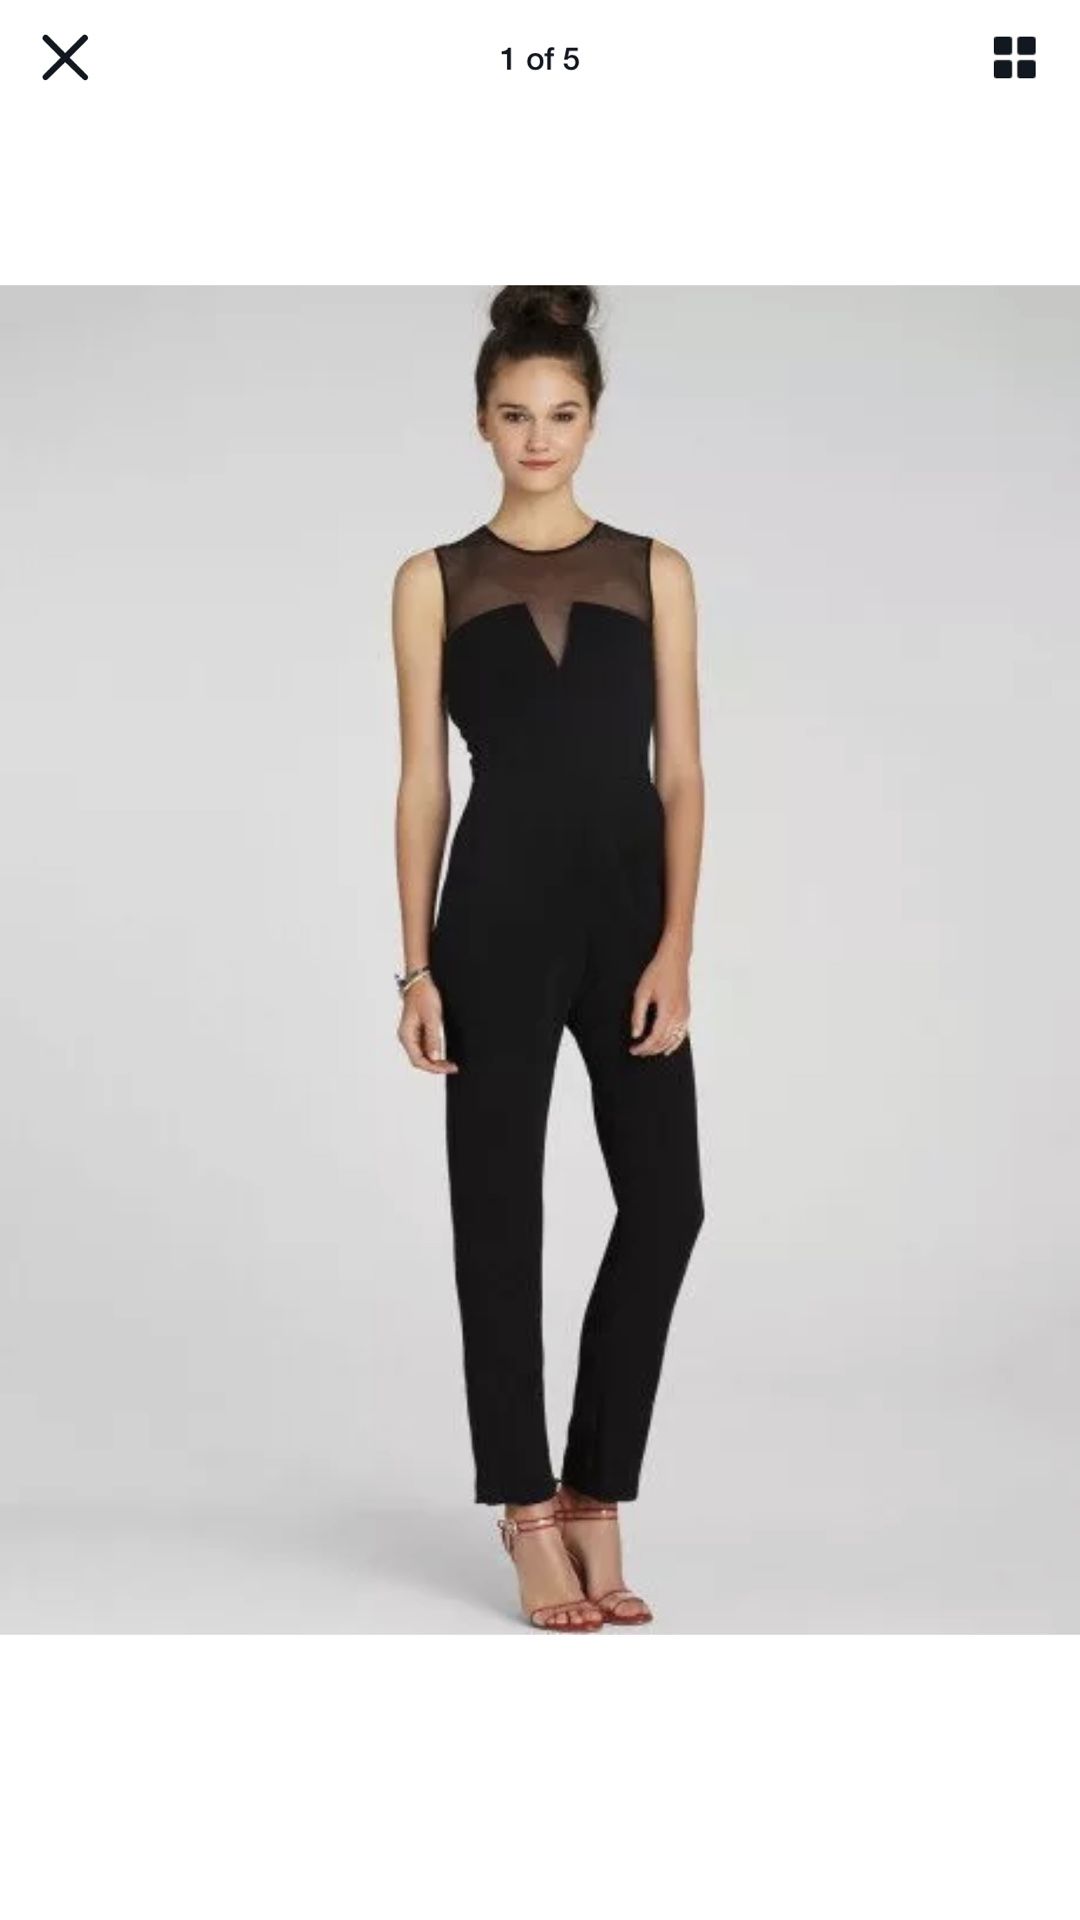 BNWT BCBGeneration Black Sheer Structured Jumpsuit Size 4 Retail $118